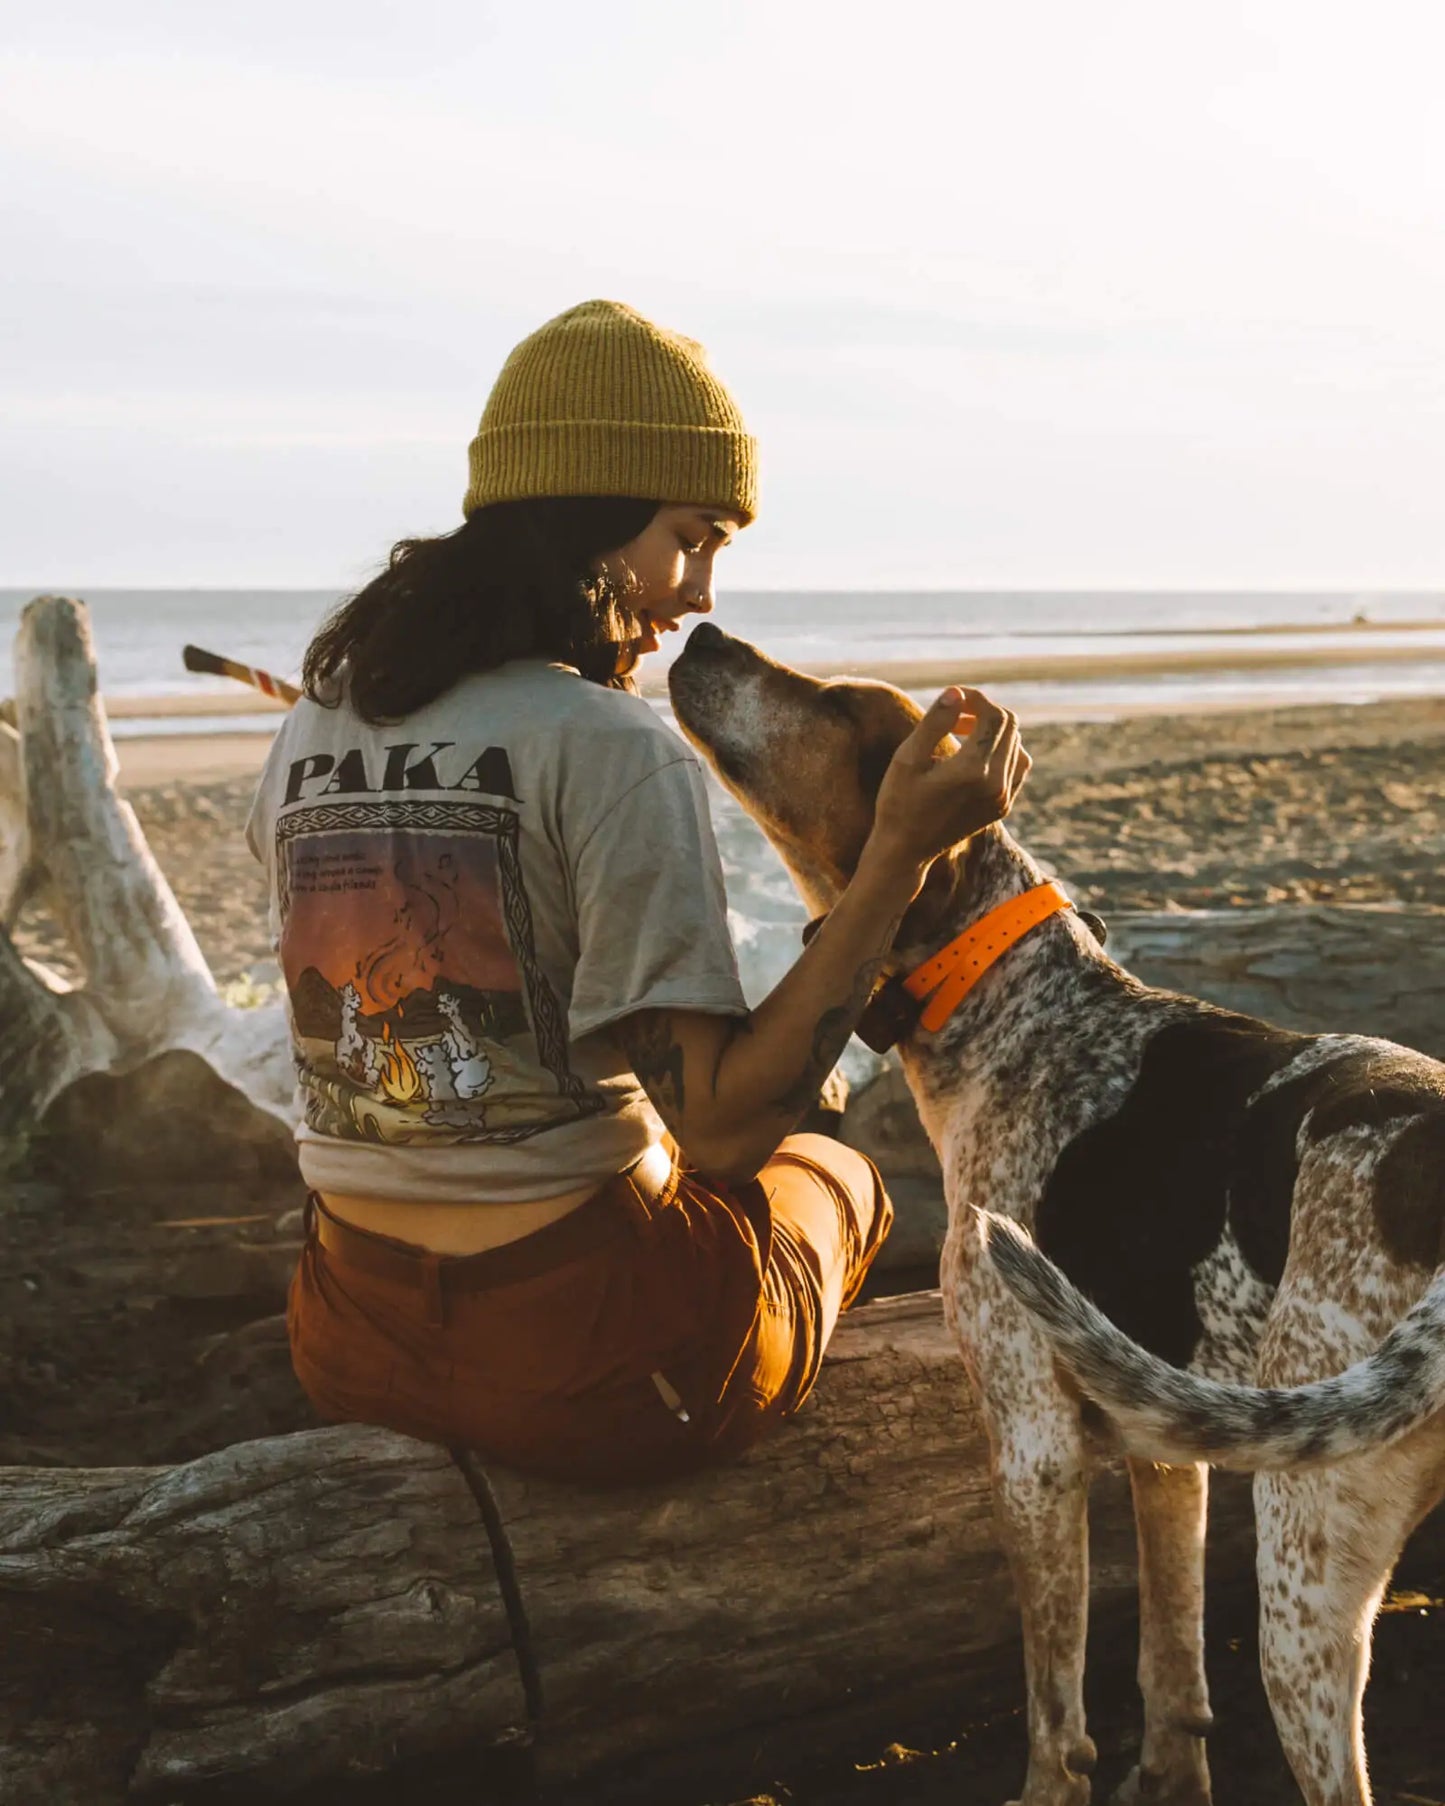 Model wearing Paka t-shirt with puppy around campfire